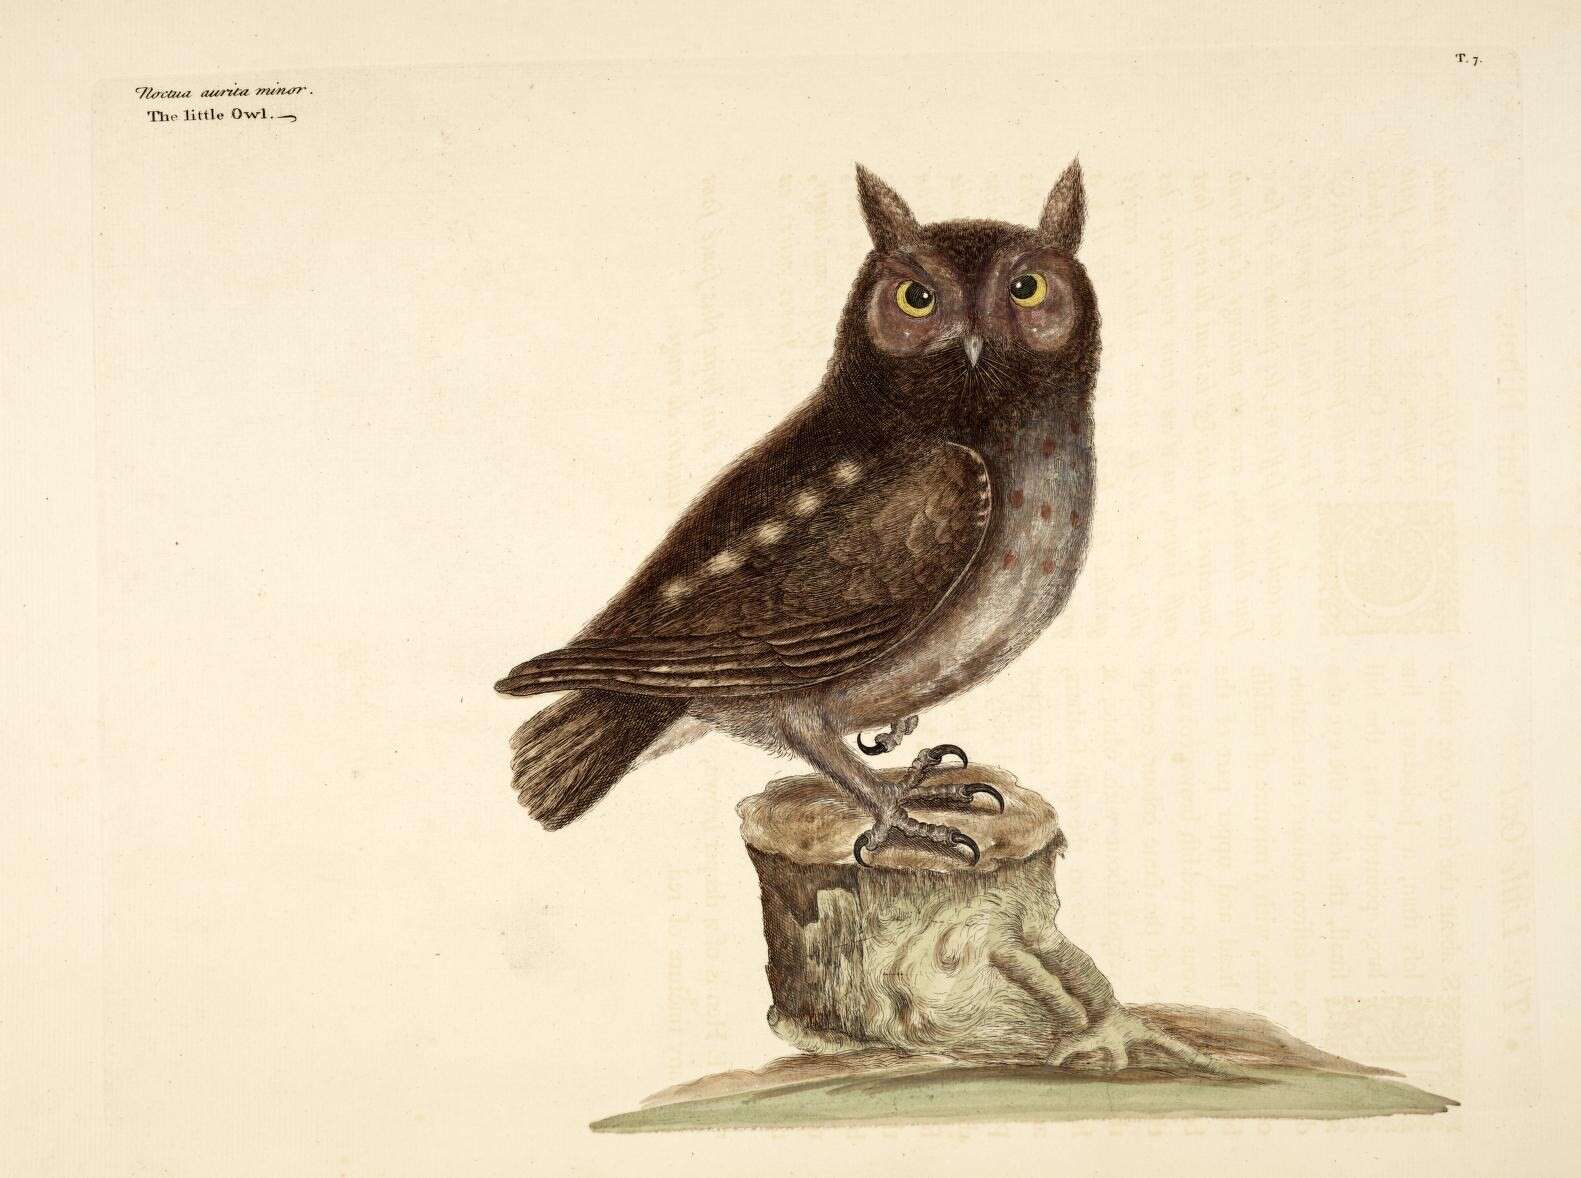 Image of Eastern Screech Owl